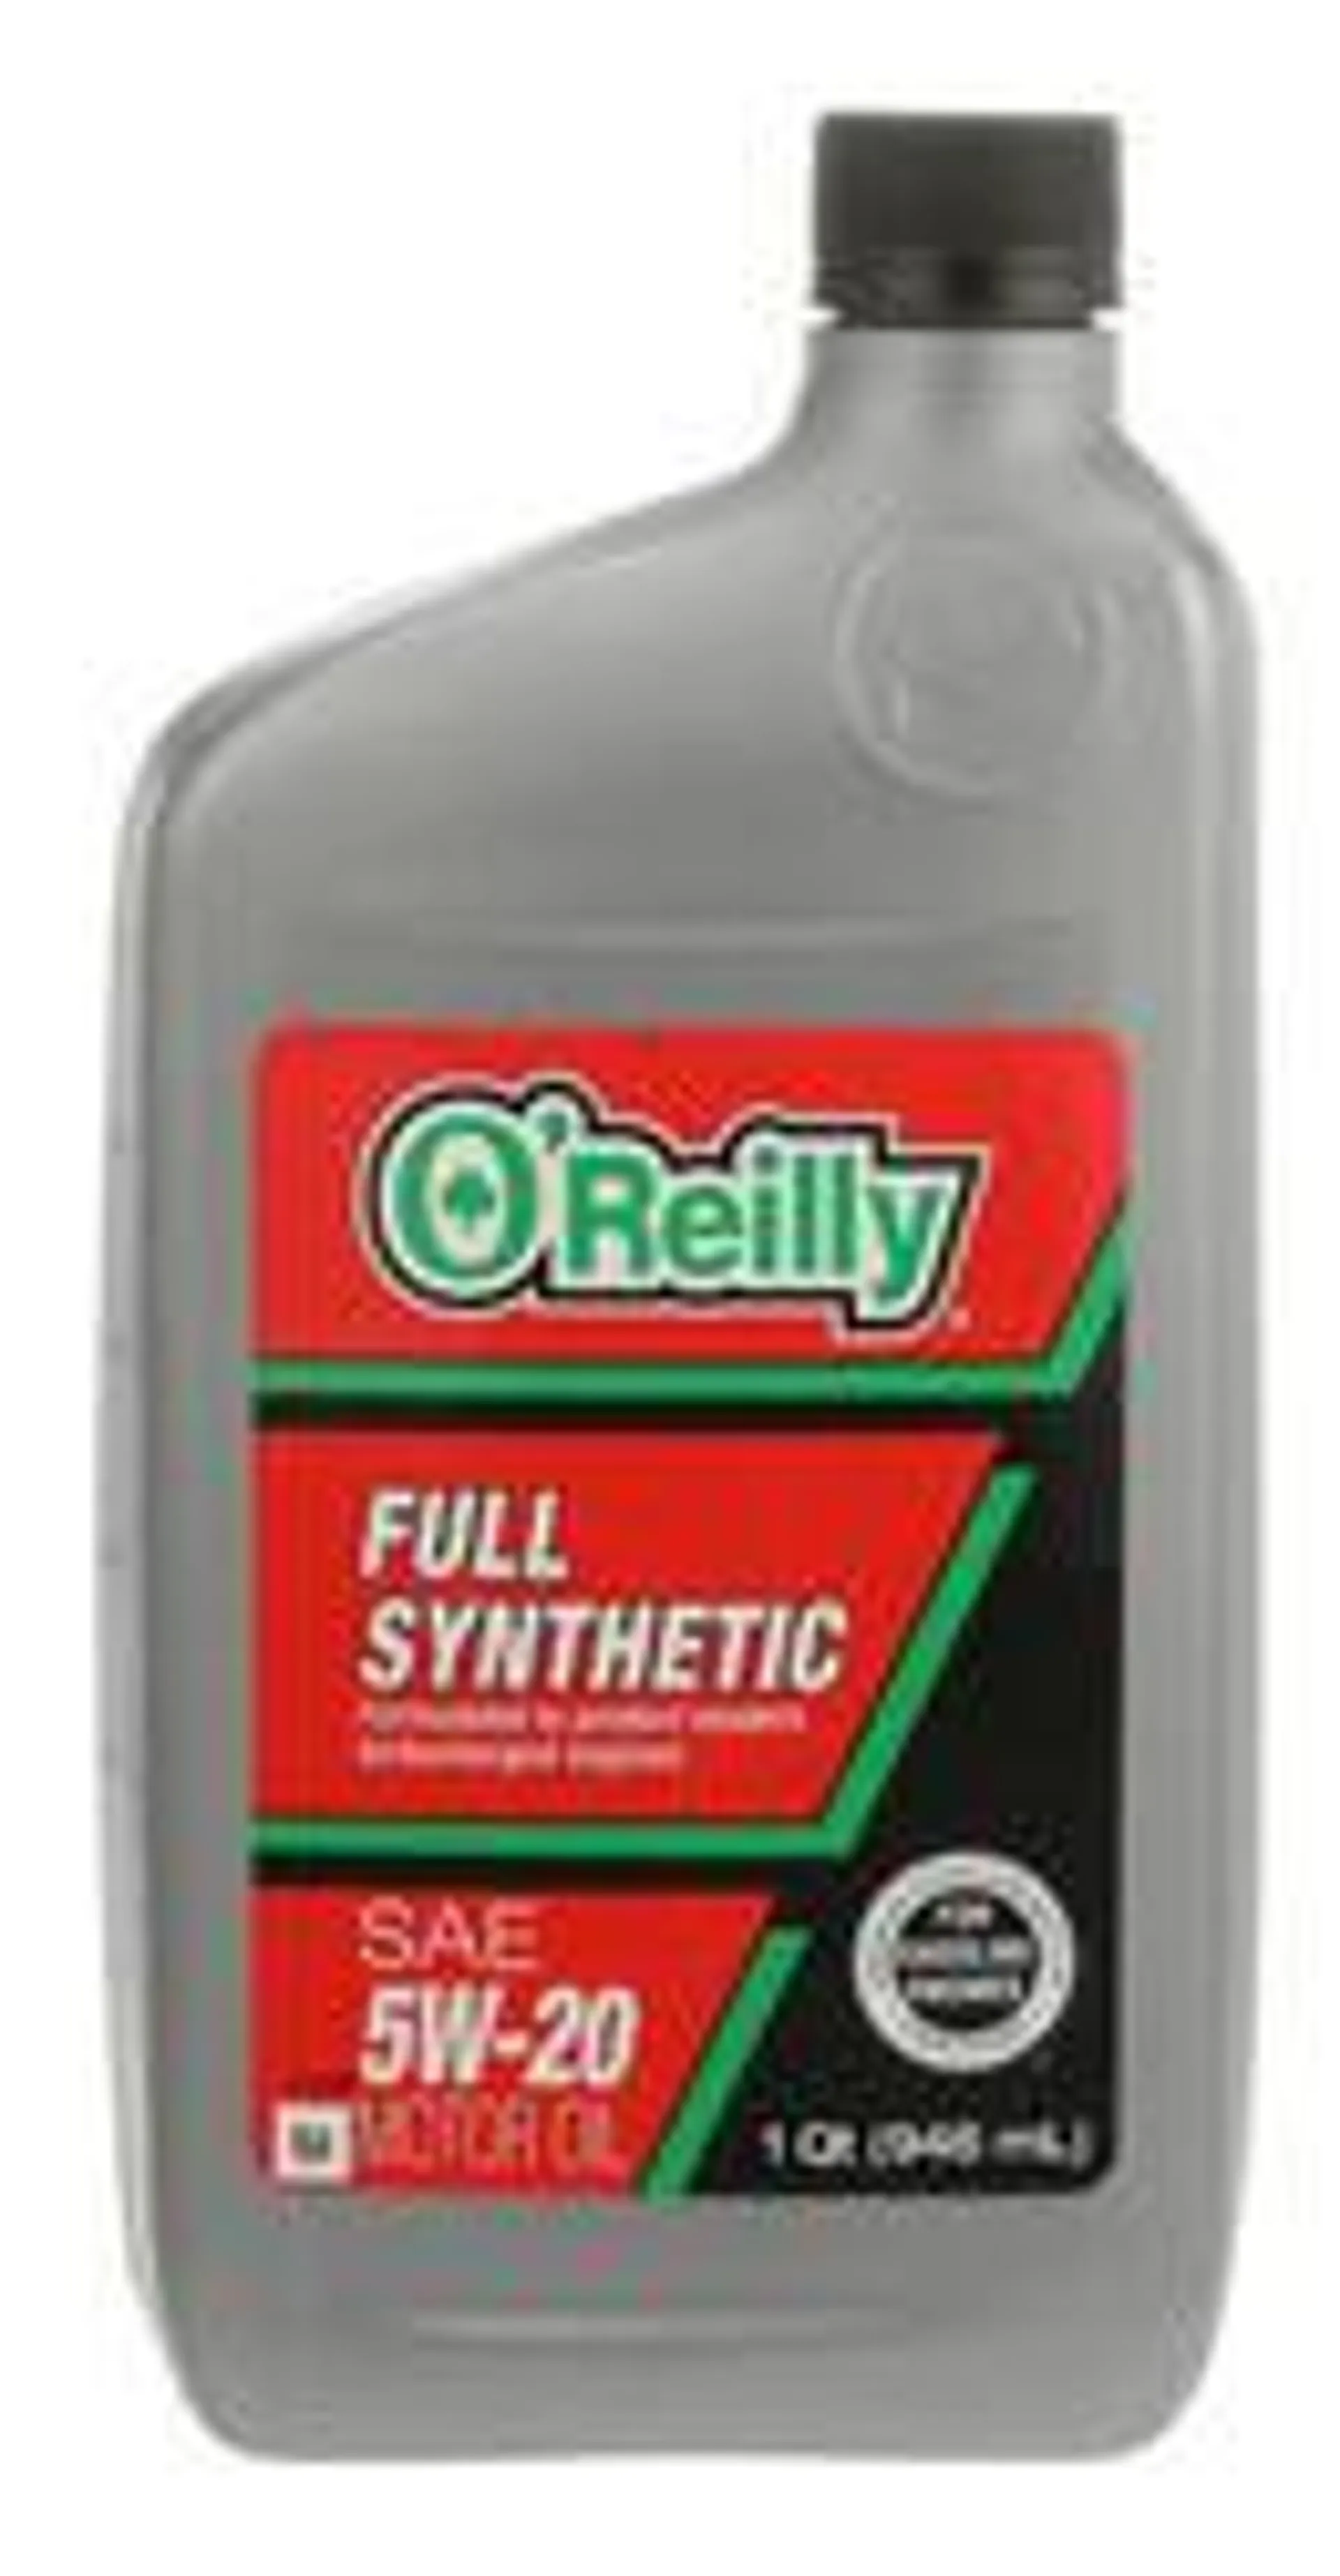 O'Reilly Full Synthetic Motor Oil 1 Quart - SYN5-20